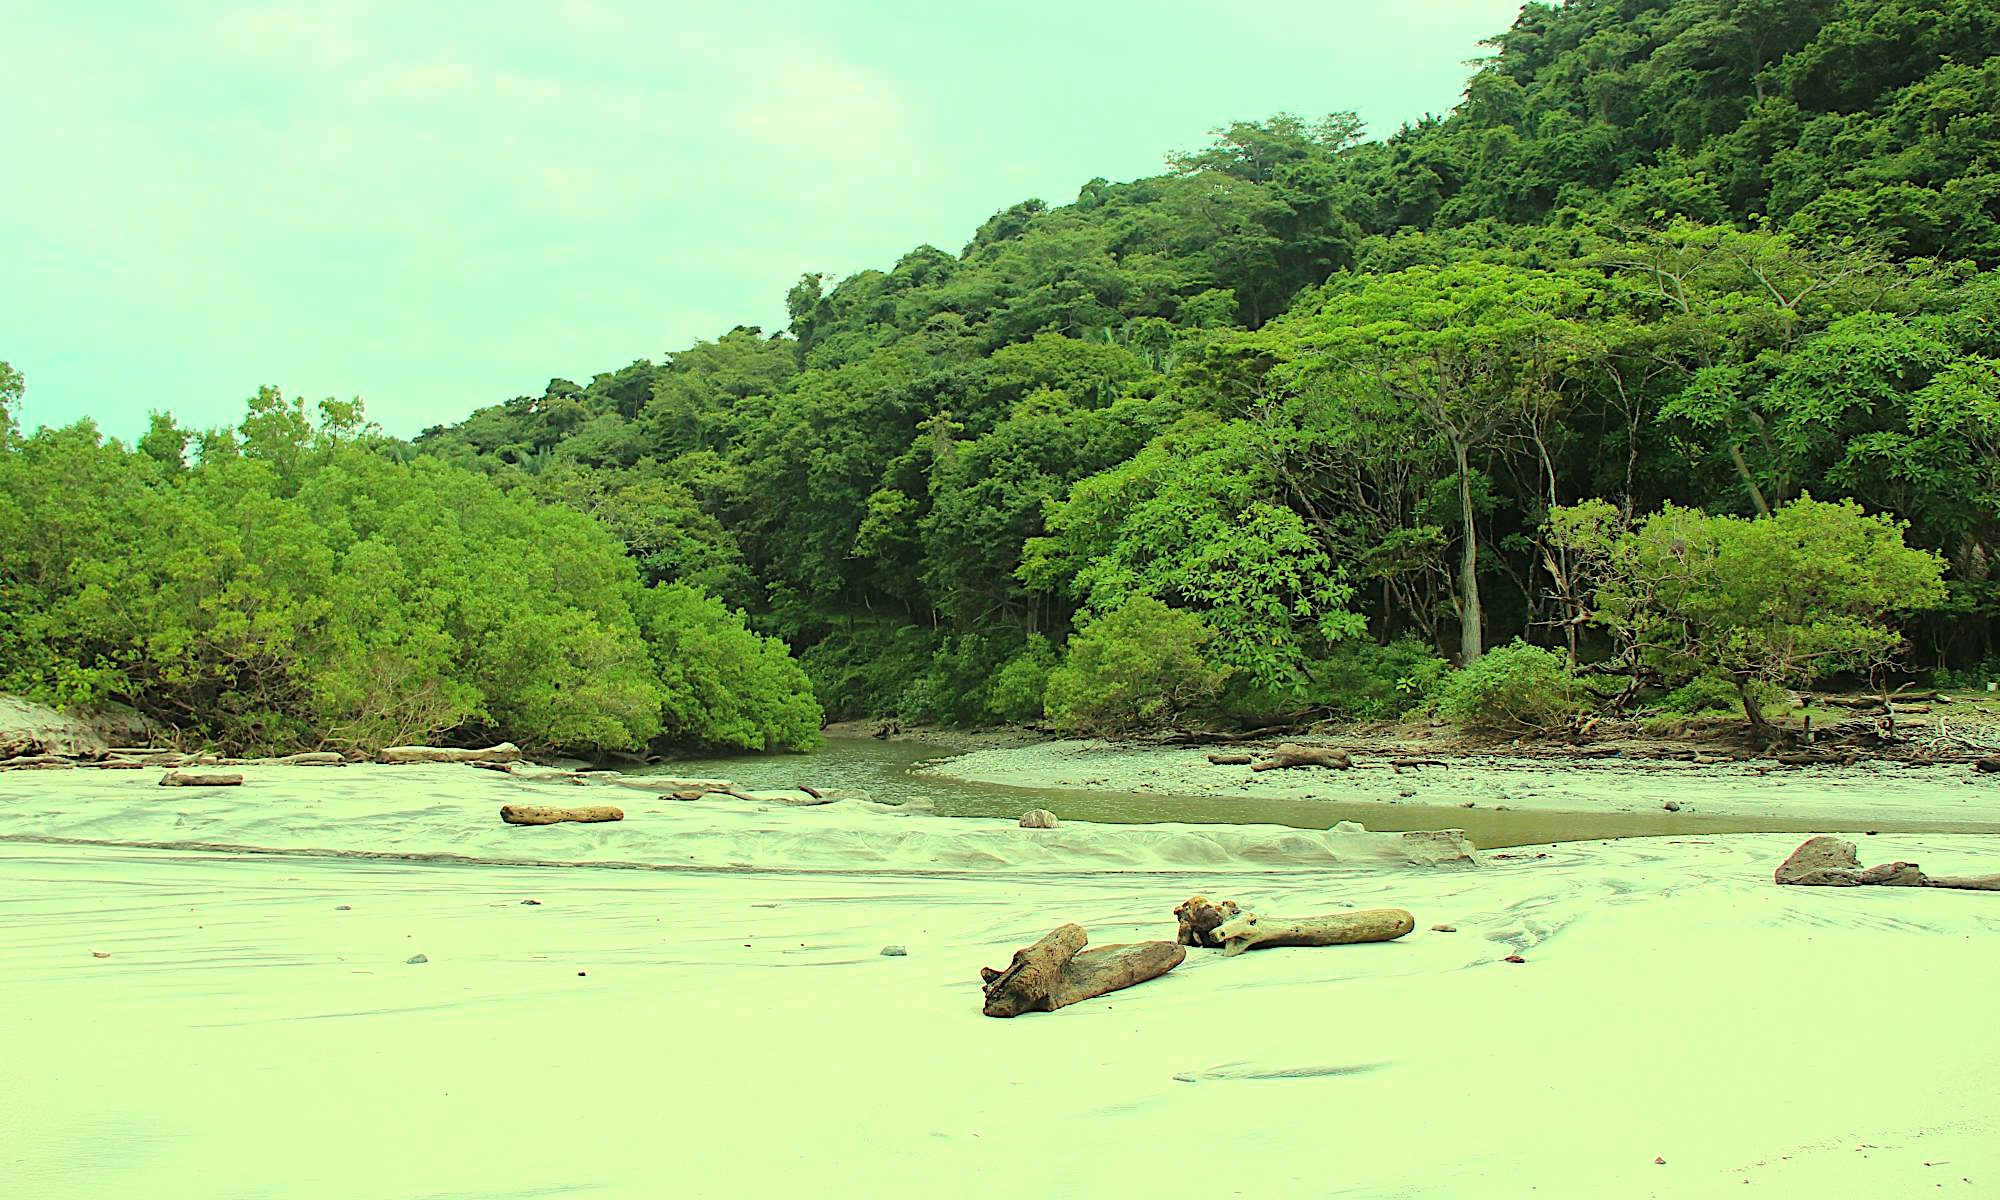 Playa an der Pazifiküste Costa Rica